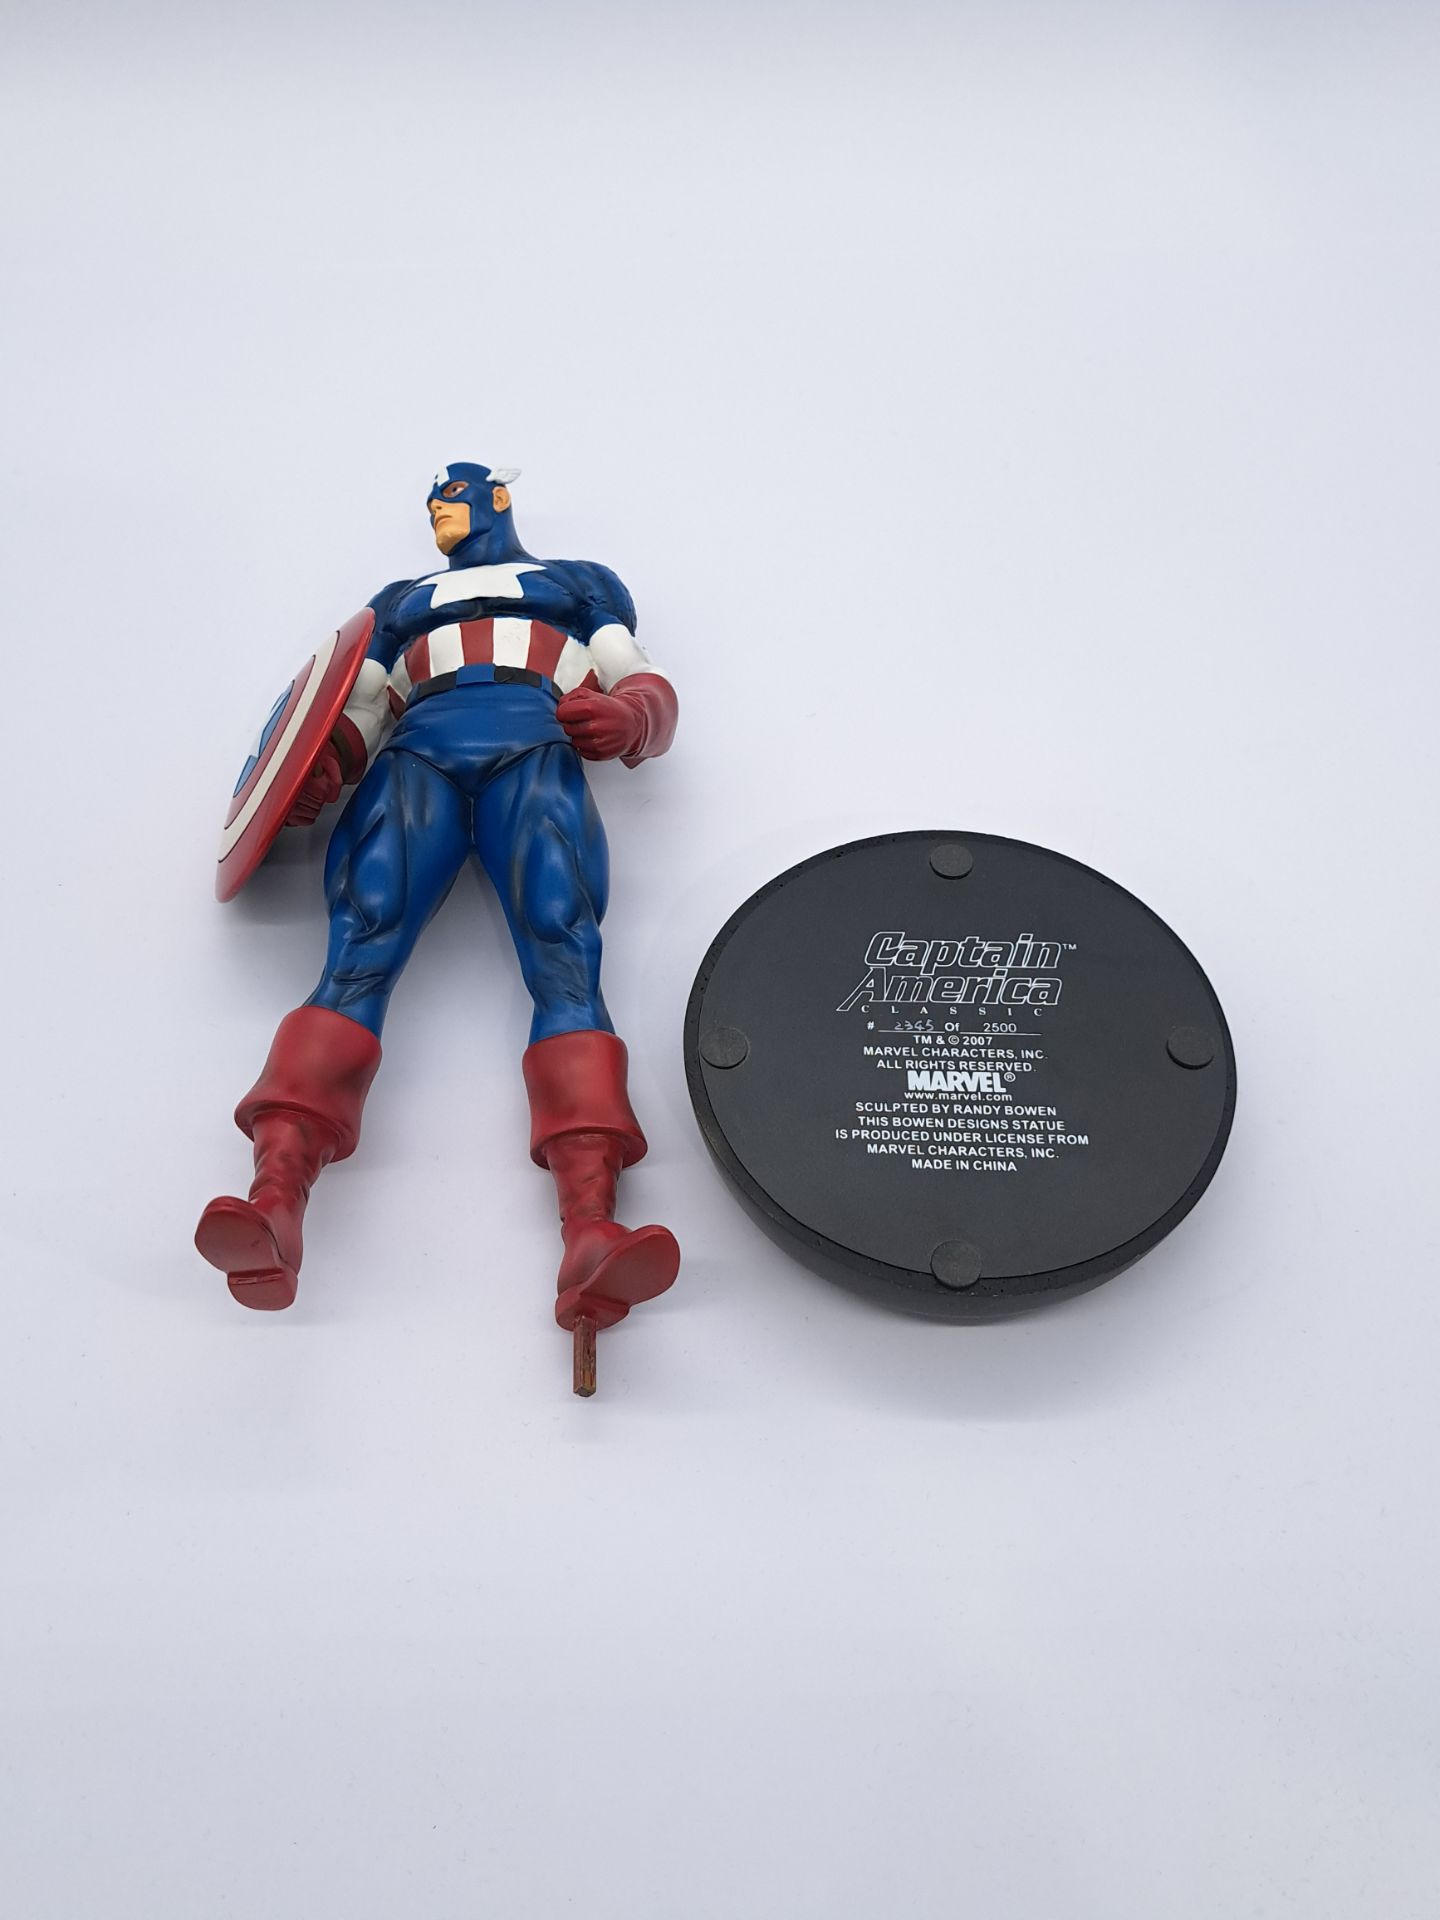 Bowen Design Classic Captain America Statue 2345 of 2500 - Image 3 of 3